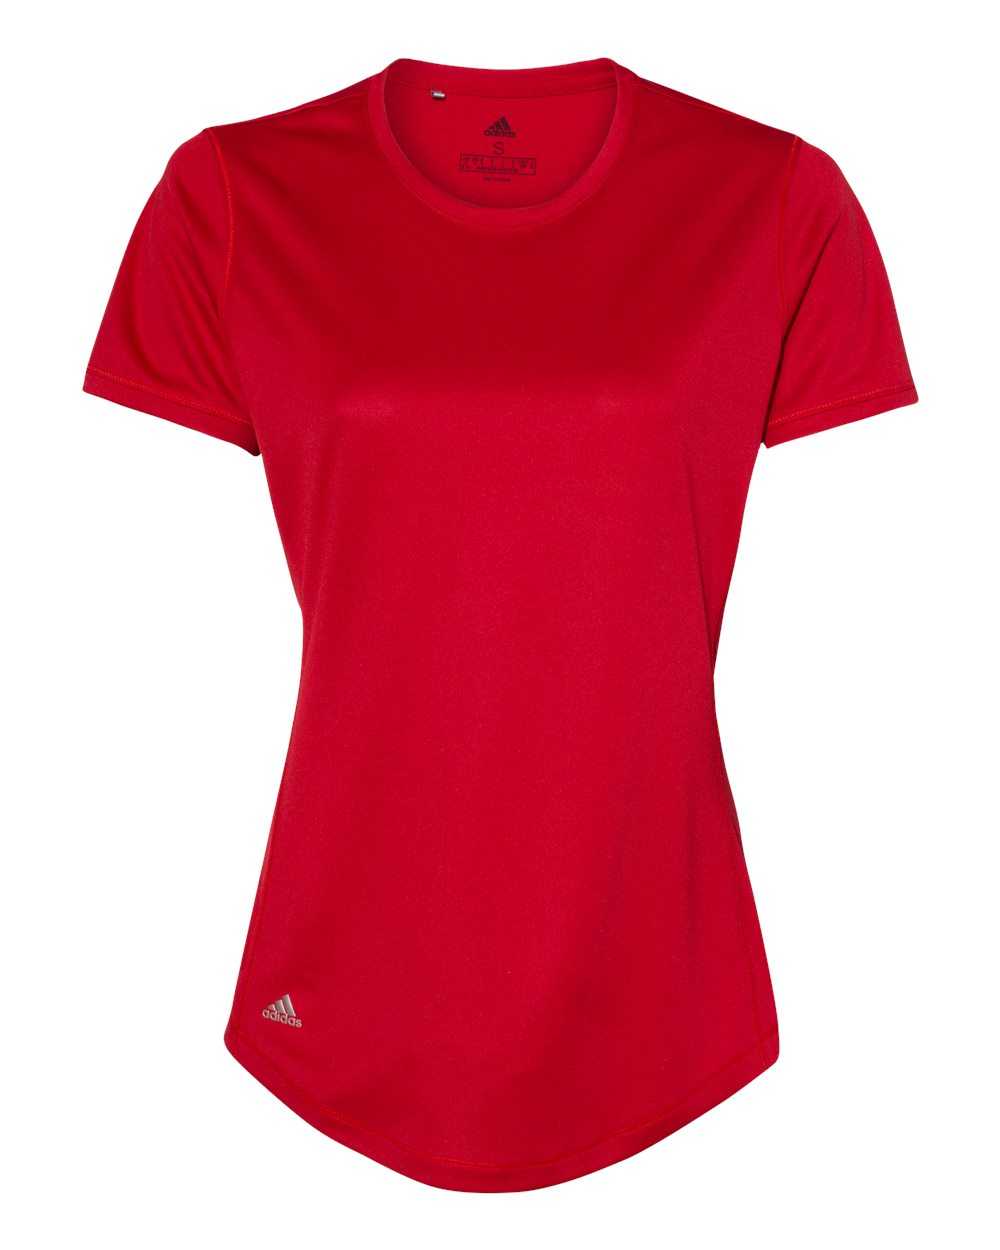 Adidas A377 Women's Sport T-Shirt - Power Red - HIT a Double